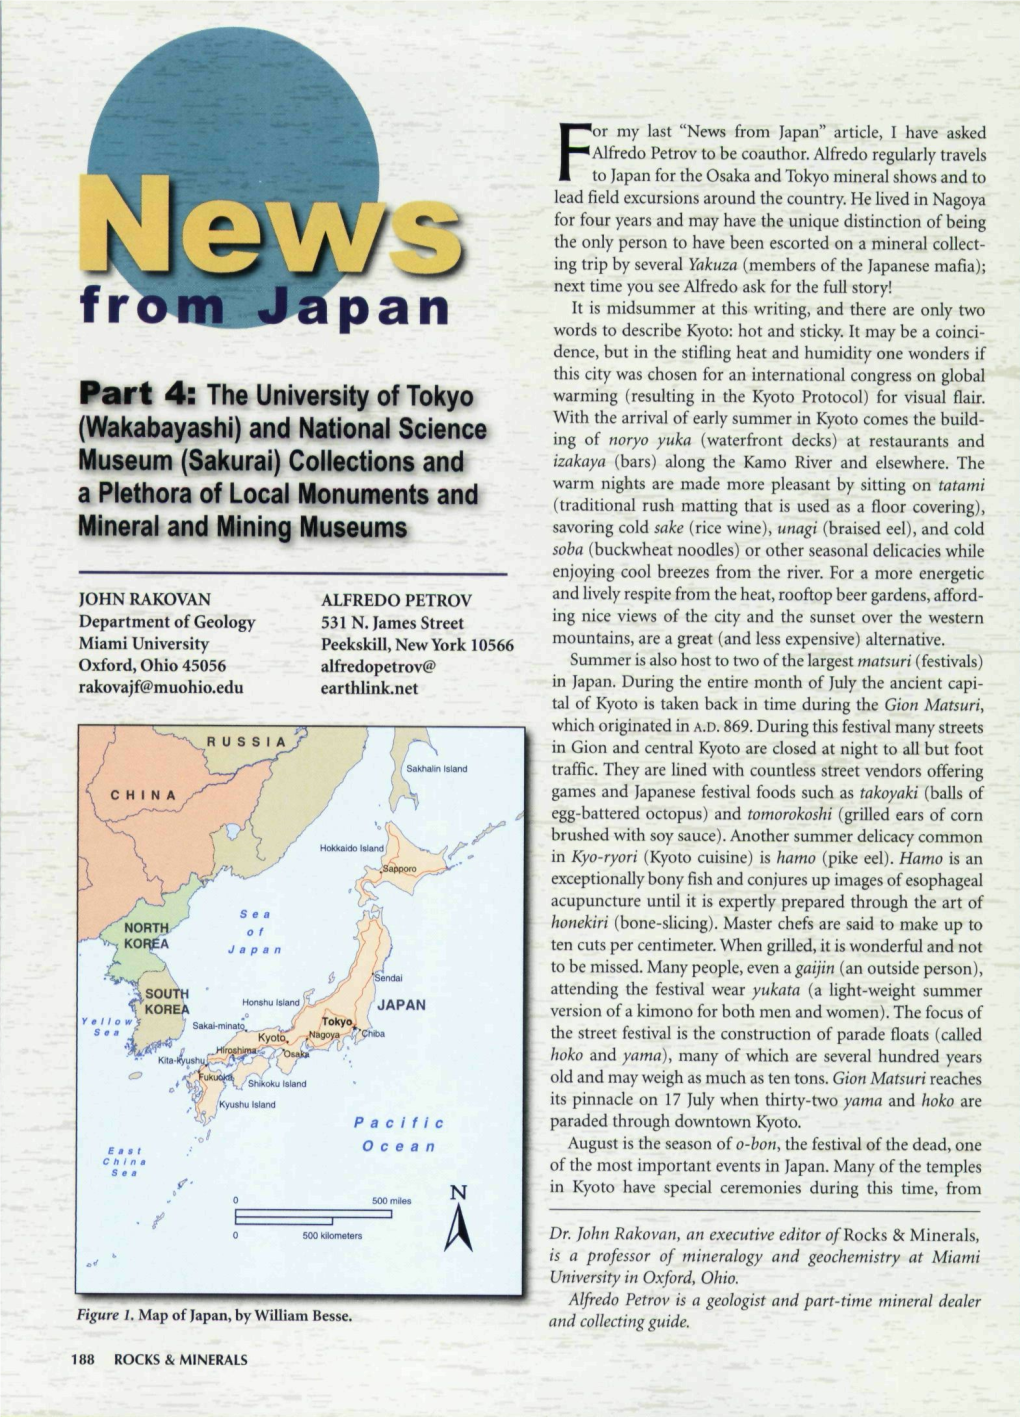 Part 4: the University of Tokyo (Wakabayashi) and Nationai